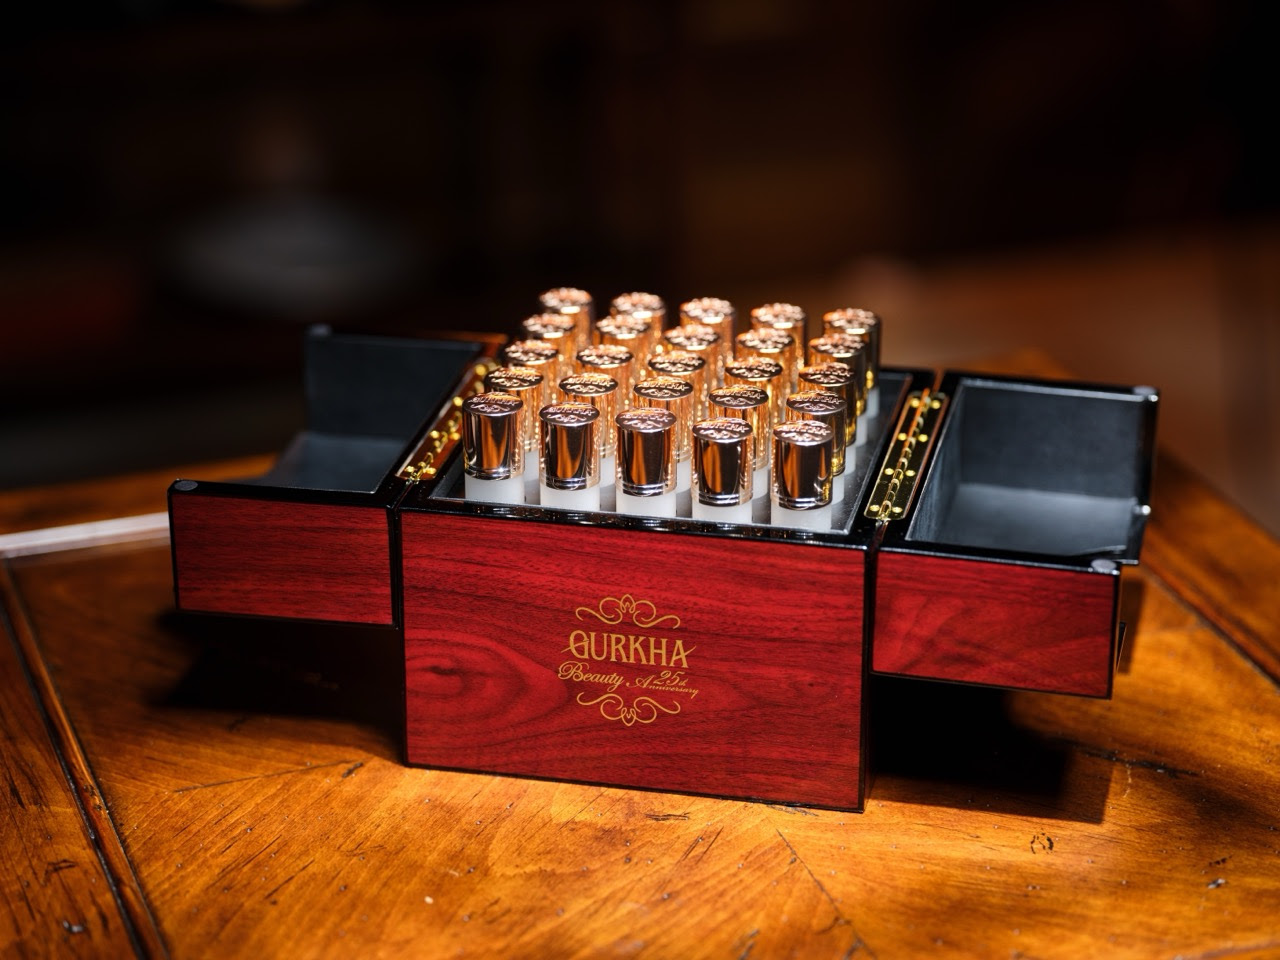 Gurkha Open Box of 25th Anniversary Beauty Cigars